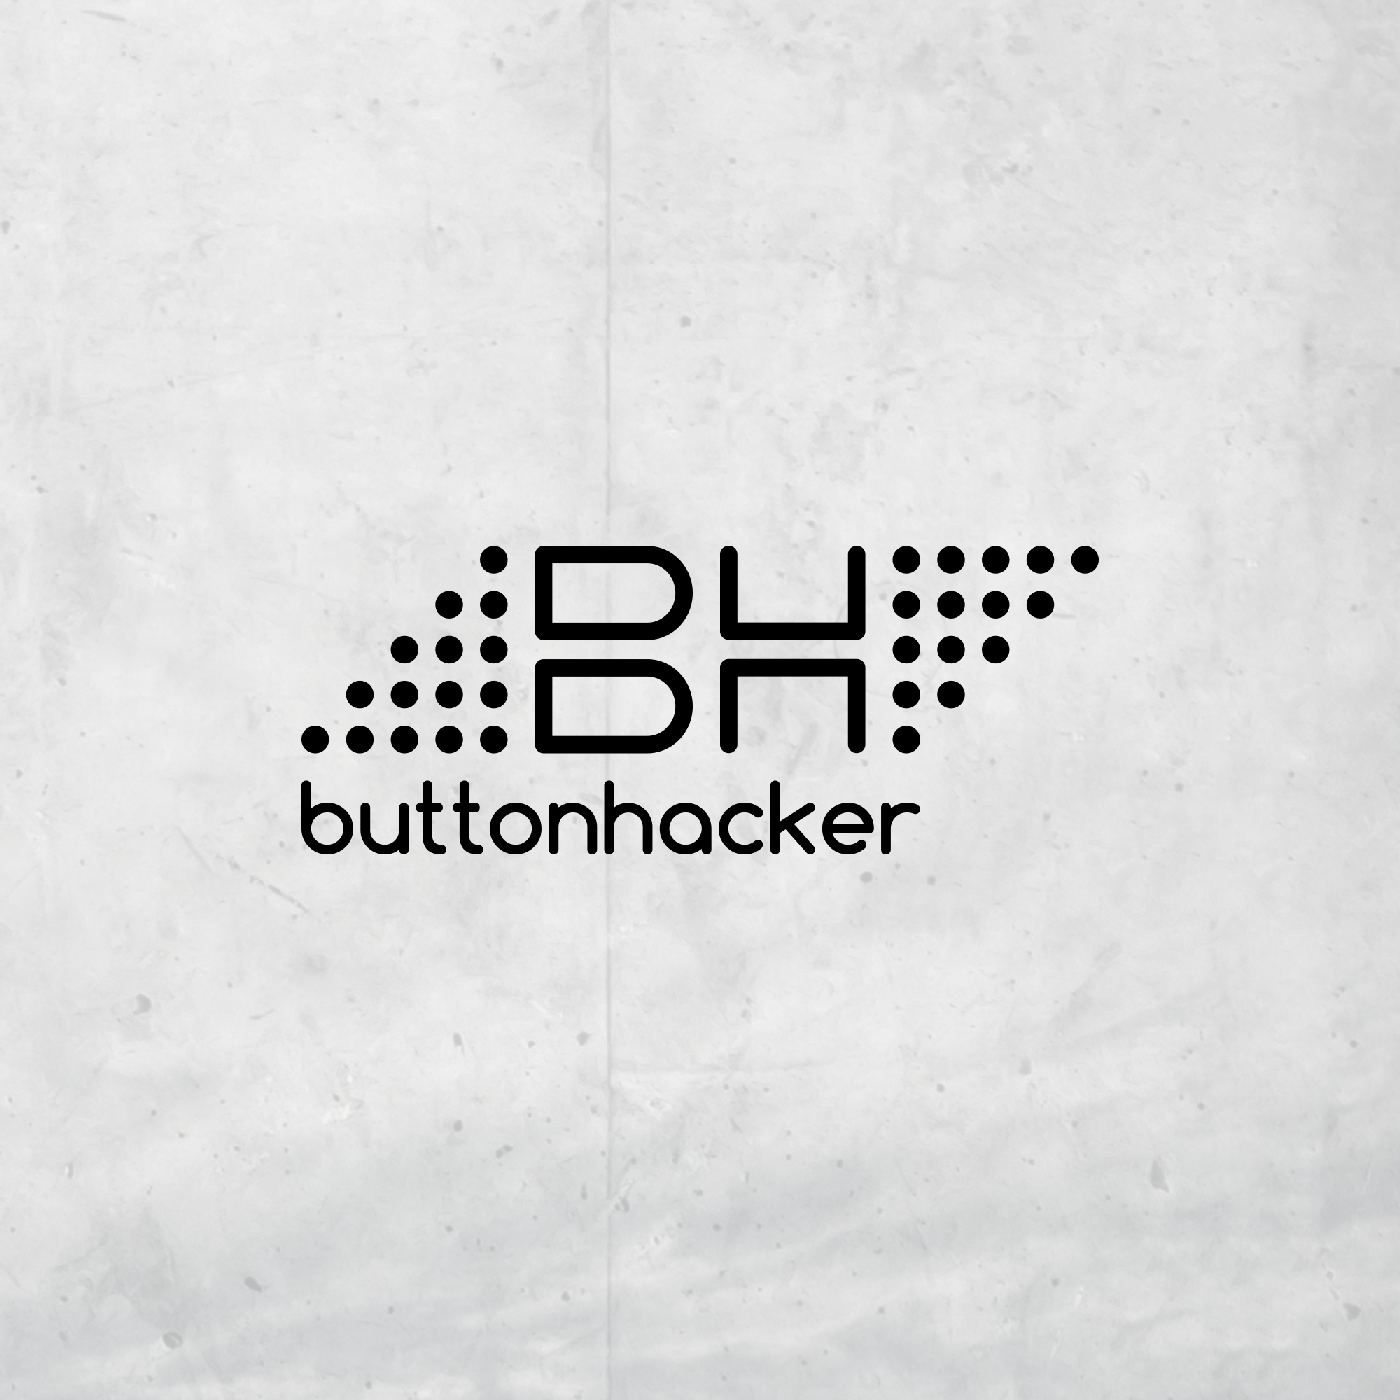 buttonhacker logo photo music video grading accordion black and white portrait lightleaks handsome